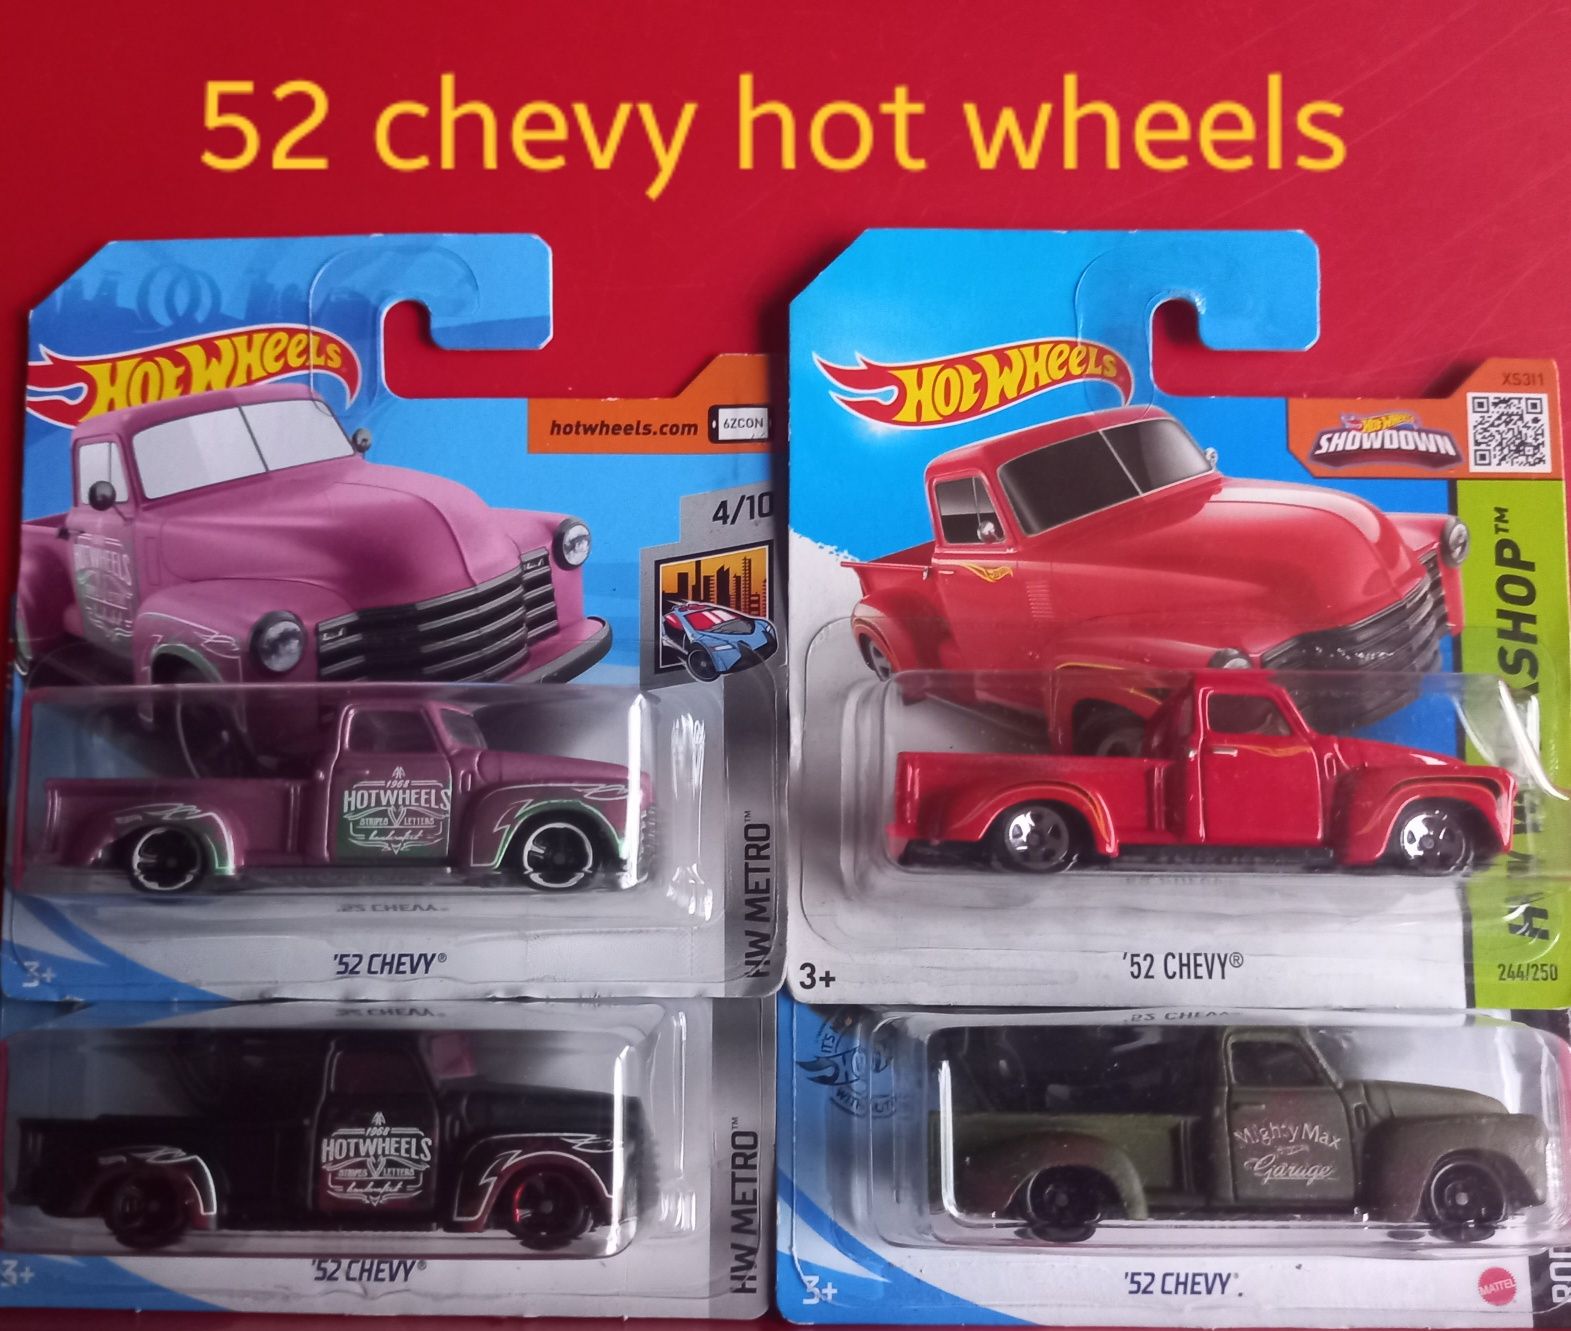 52 chevy hot wheels